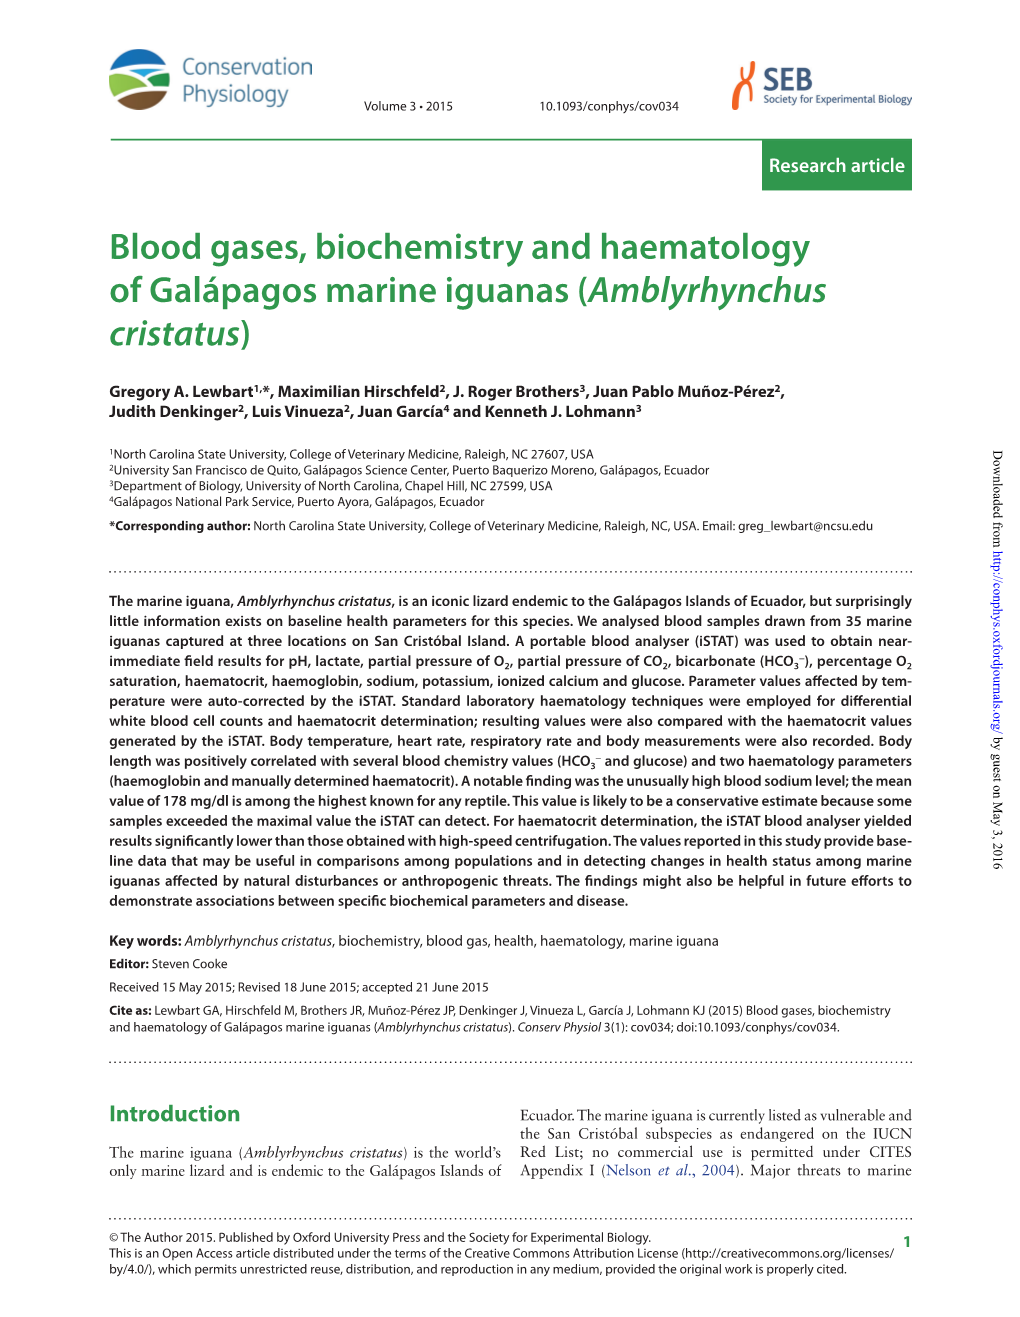 Blood Gases, Biochemistry and Haematology of Galápagos Marine Iguanas (Amblyrhynchus Cristatus)